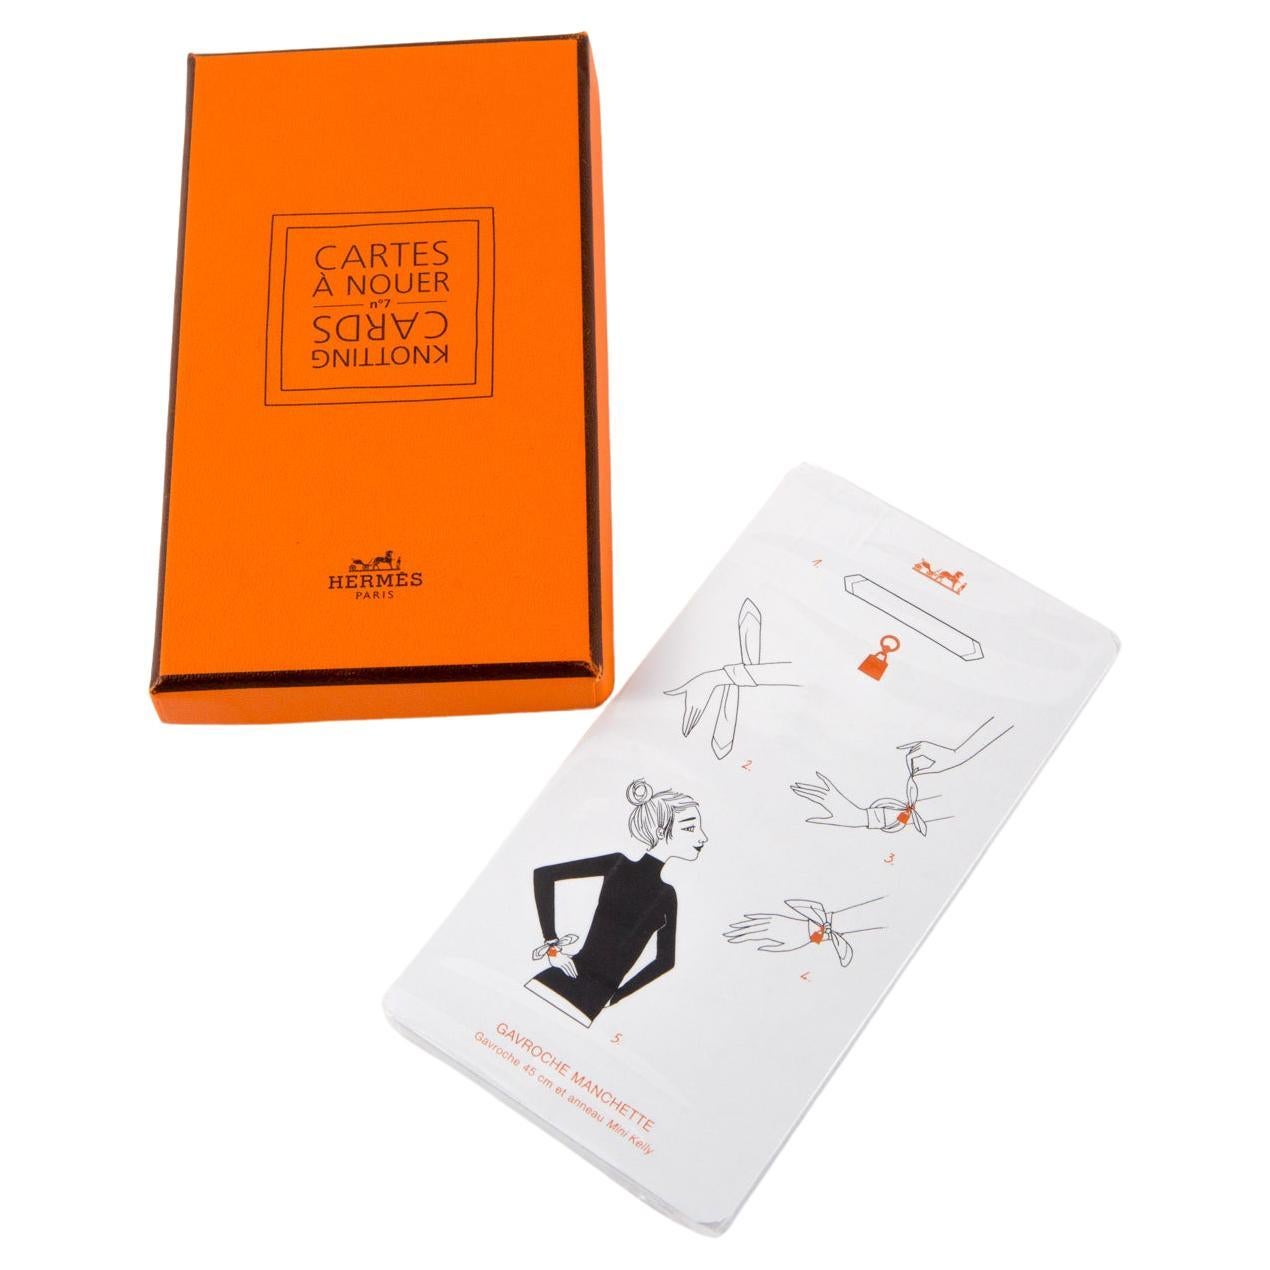 Hermes Never Open Iconic Orange Knotting Cards